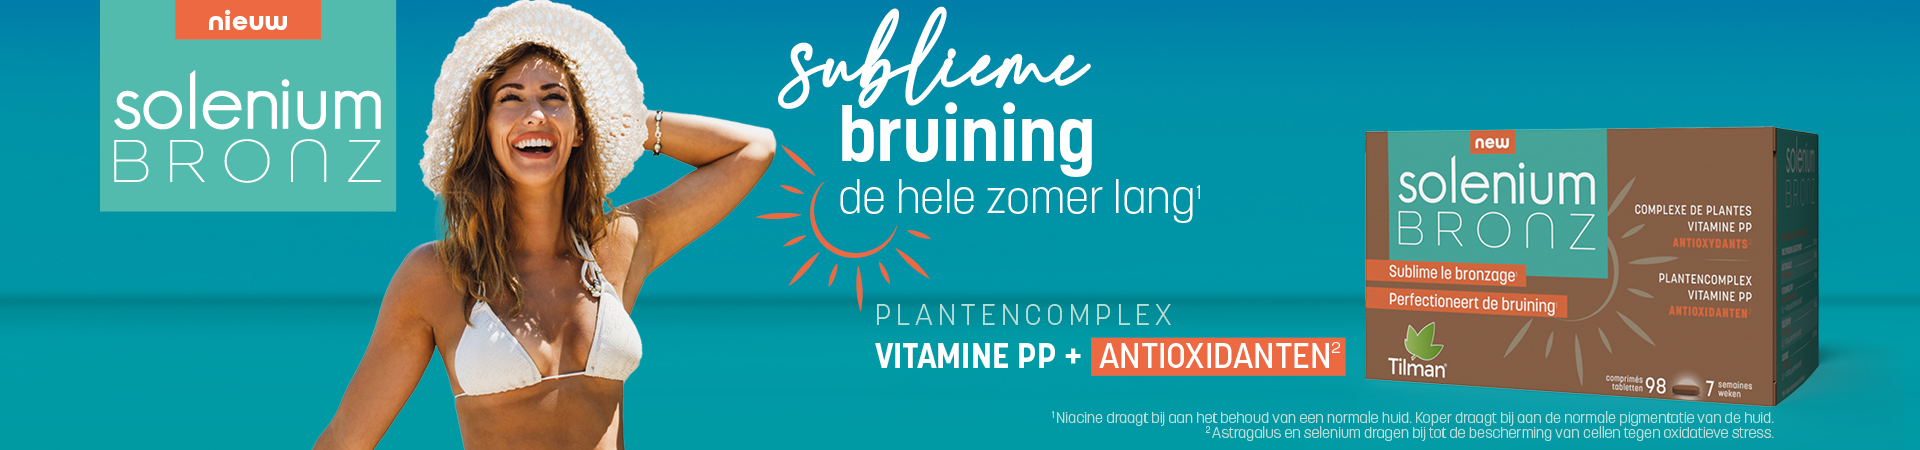 solenium-bronz_be_landing-page_banner-1_nl